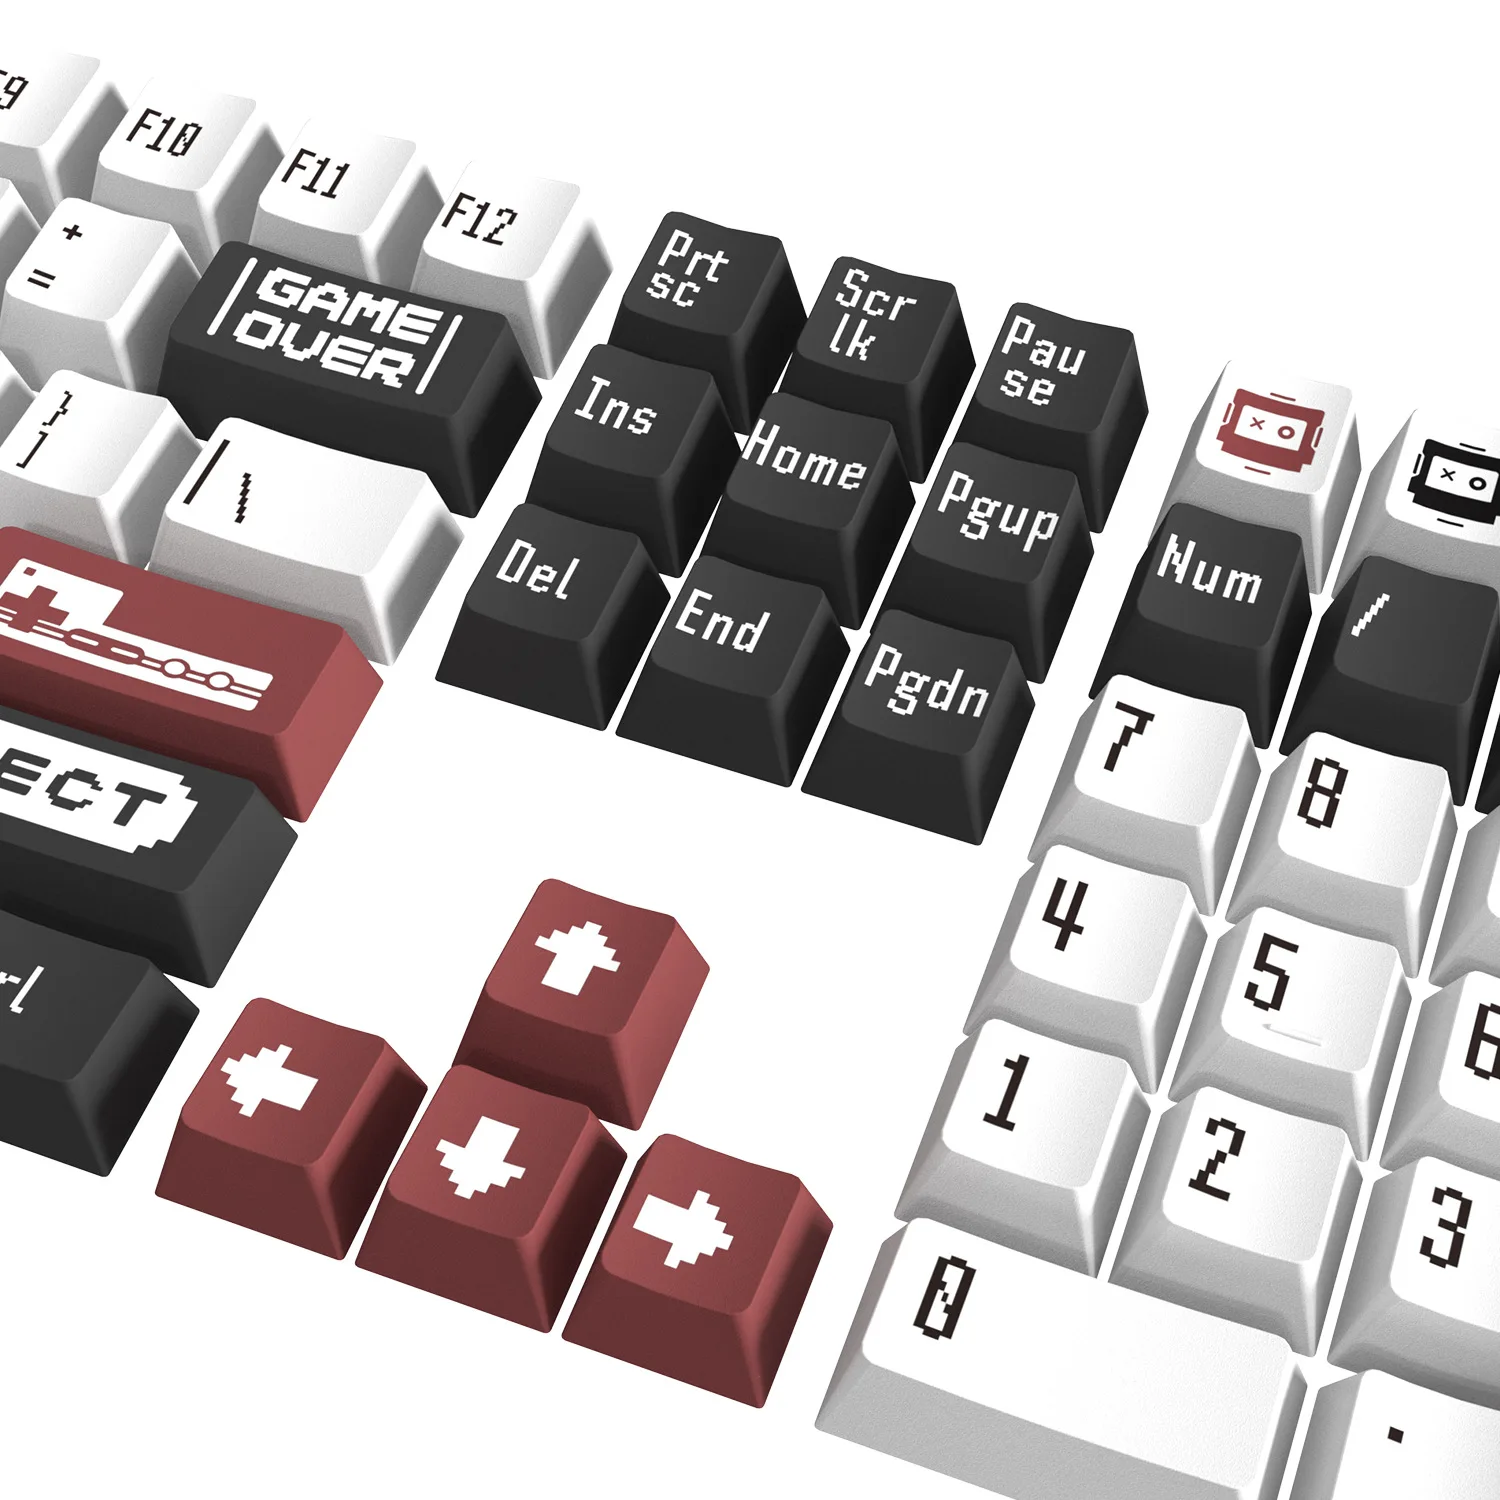 129 Keys Retro family Computer keycaps For Cherry MX Switch Mechanical Keyboard OEM Profile Dye Sublimation PBT Arabic key Caps